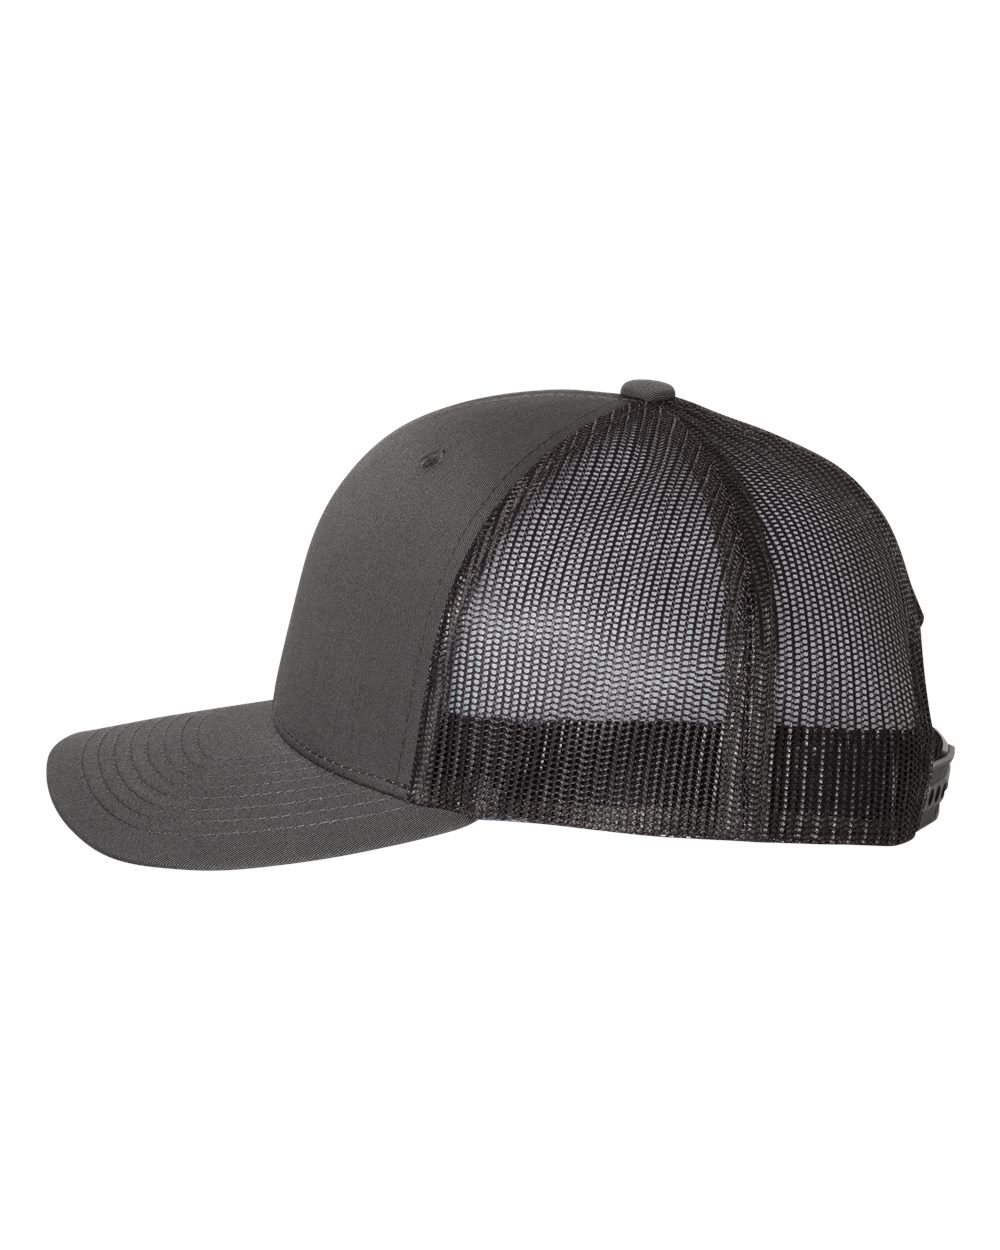 Memphis Grizzlies YP Snapback Trucker Hat- Charcoal - Ten Gallon Hat Co.